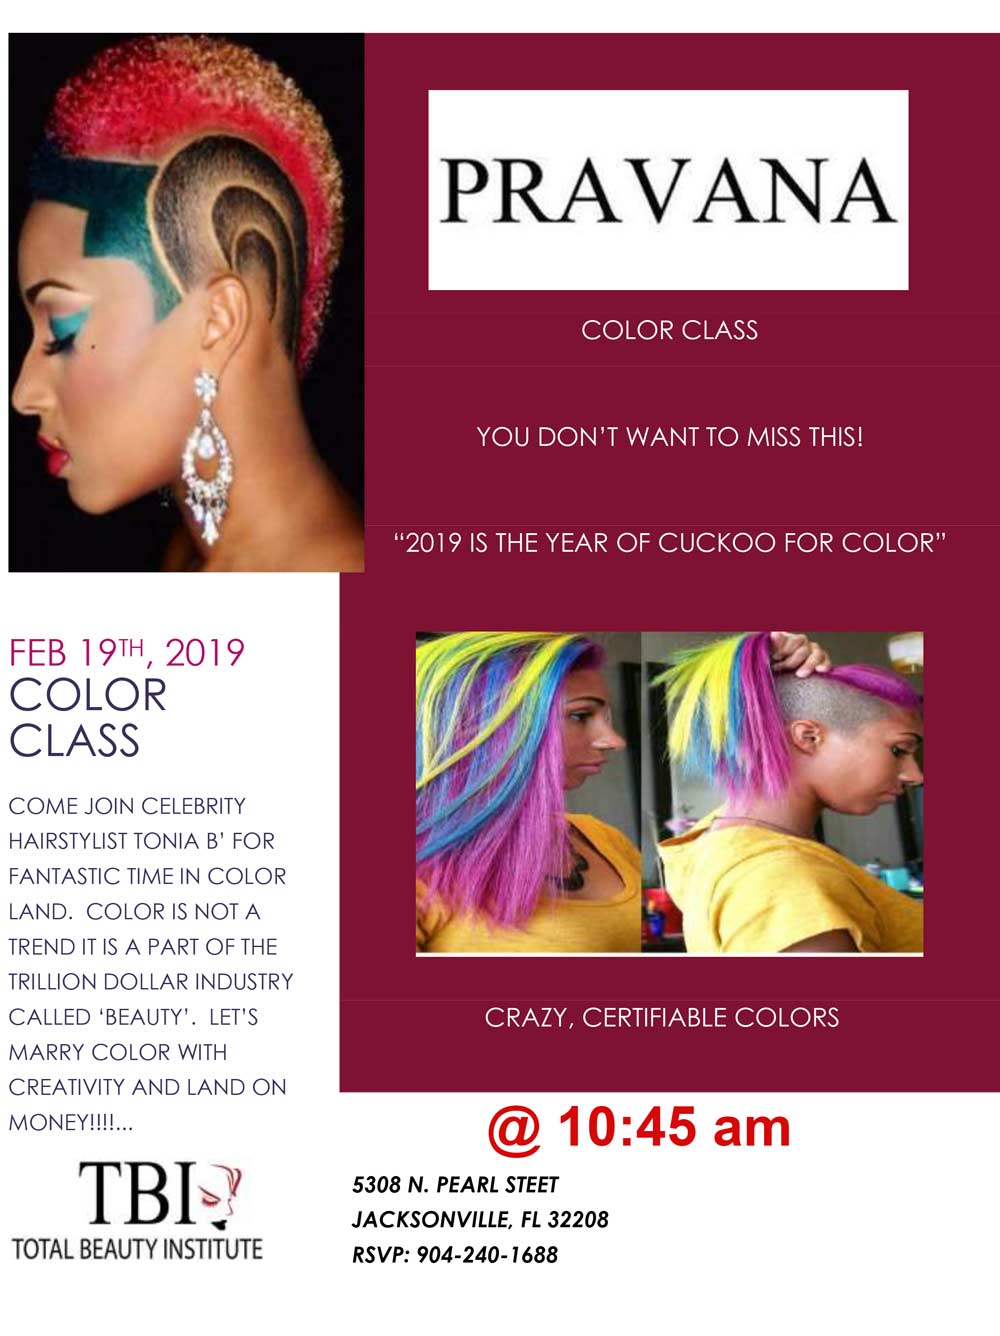 Pravana Color Class